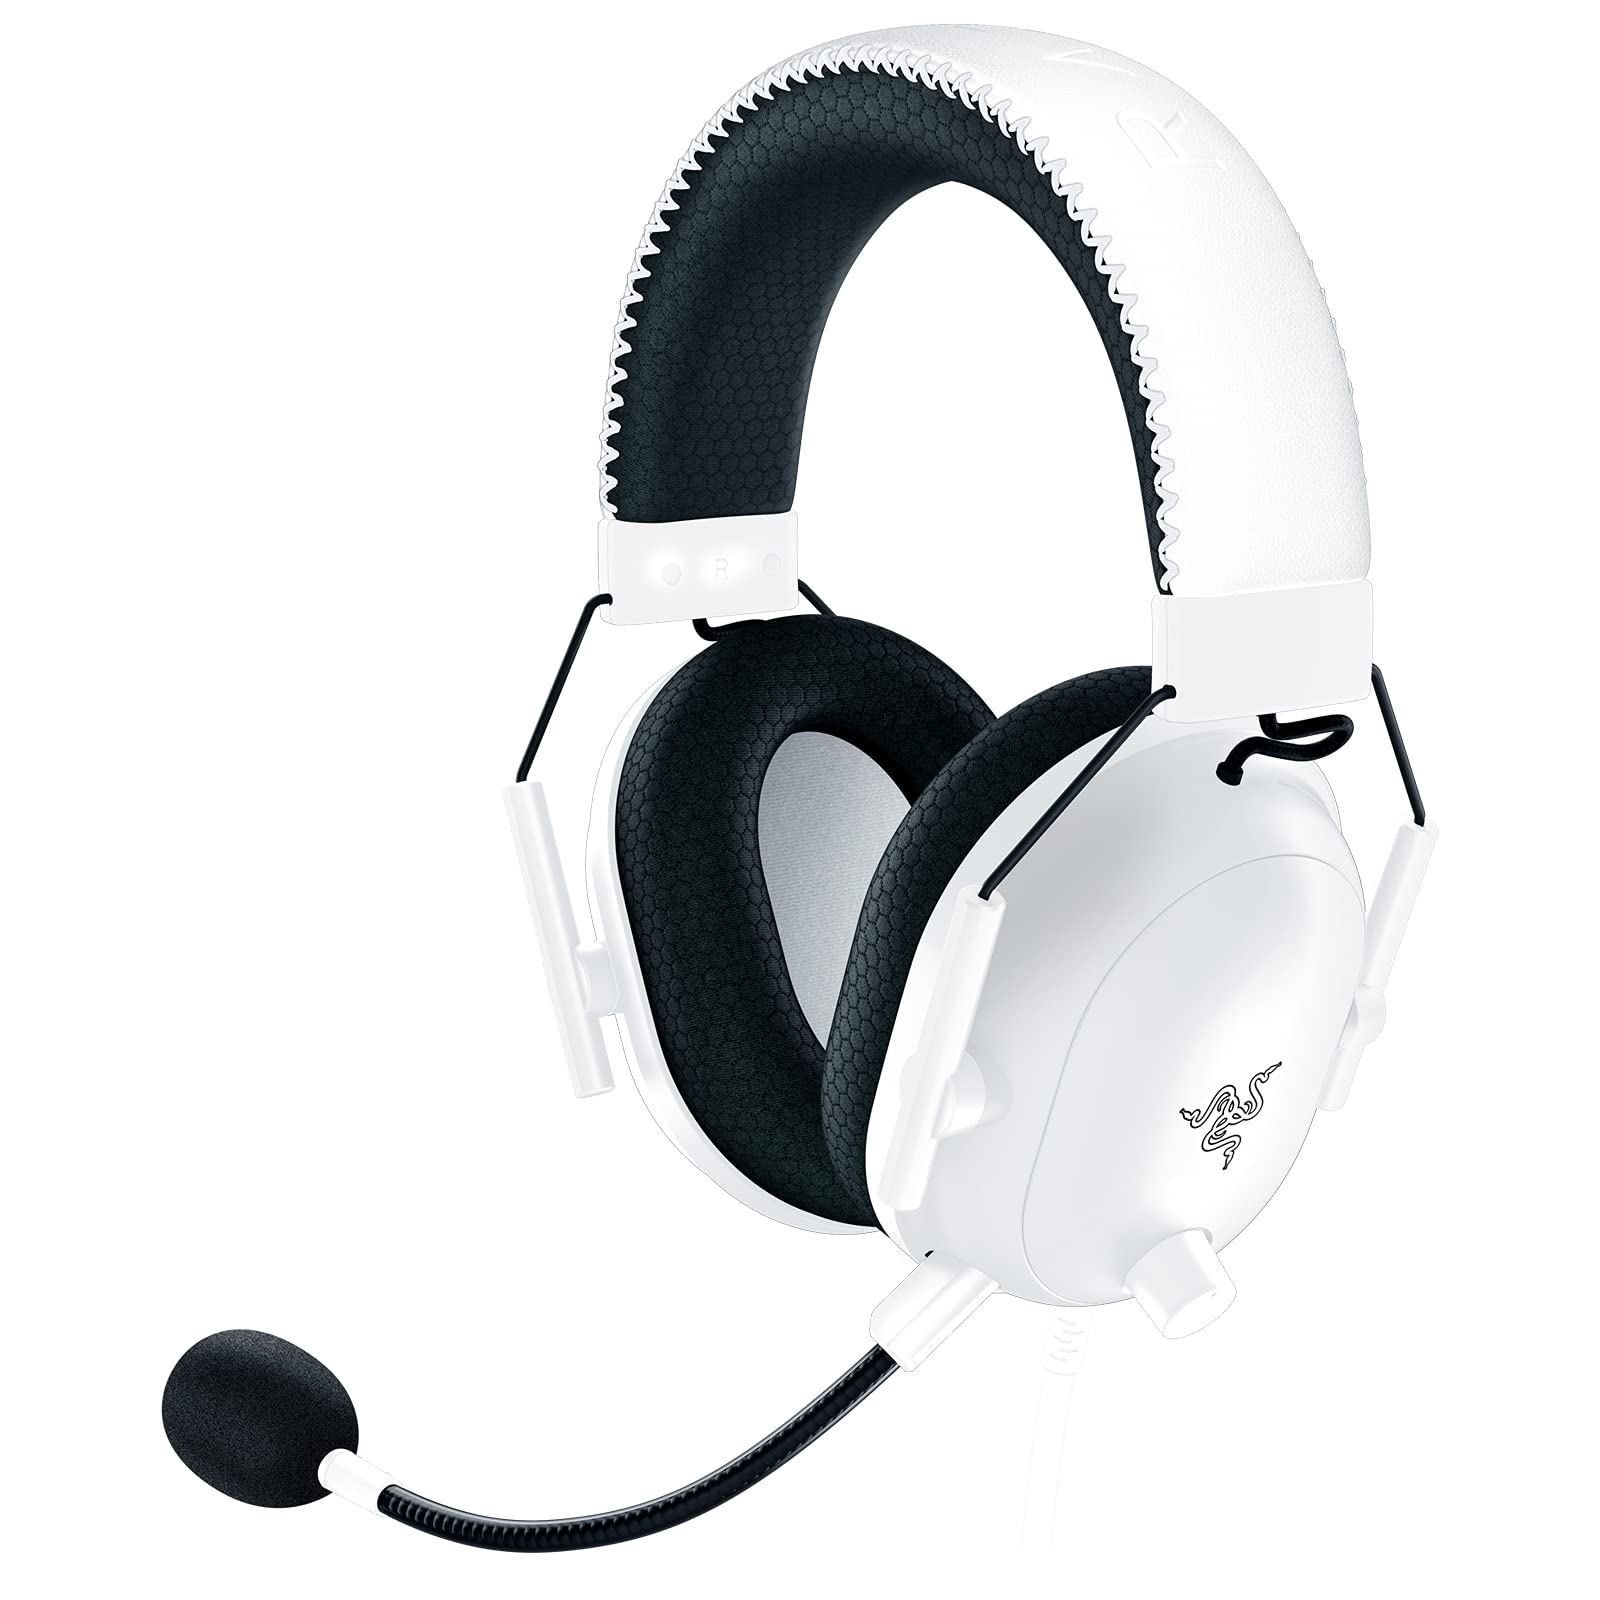 Razer BlackShark V2 Pro Wireless Gaming Headset (White, Used: Like New) $43.75 + Free Shipping